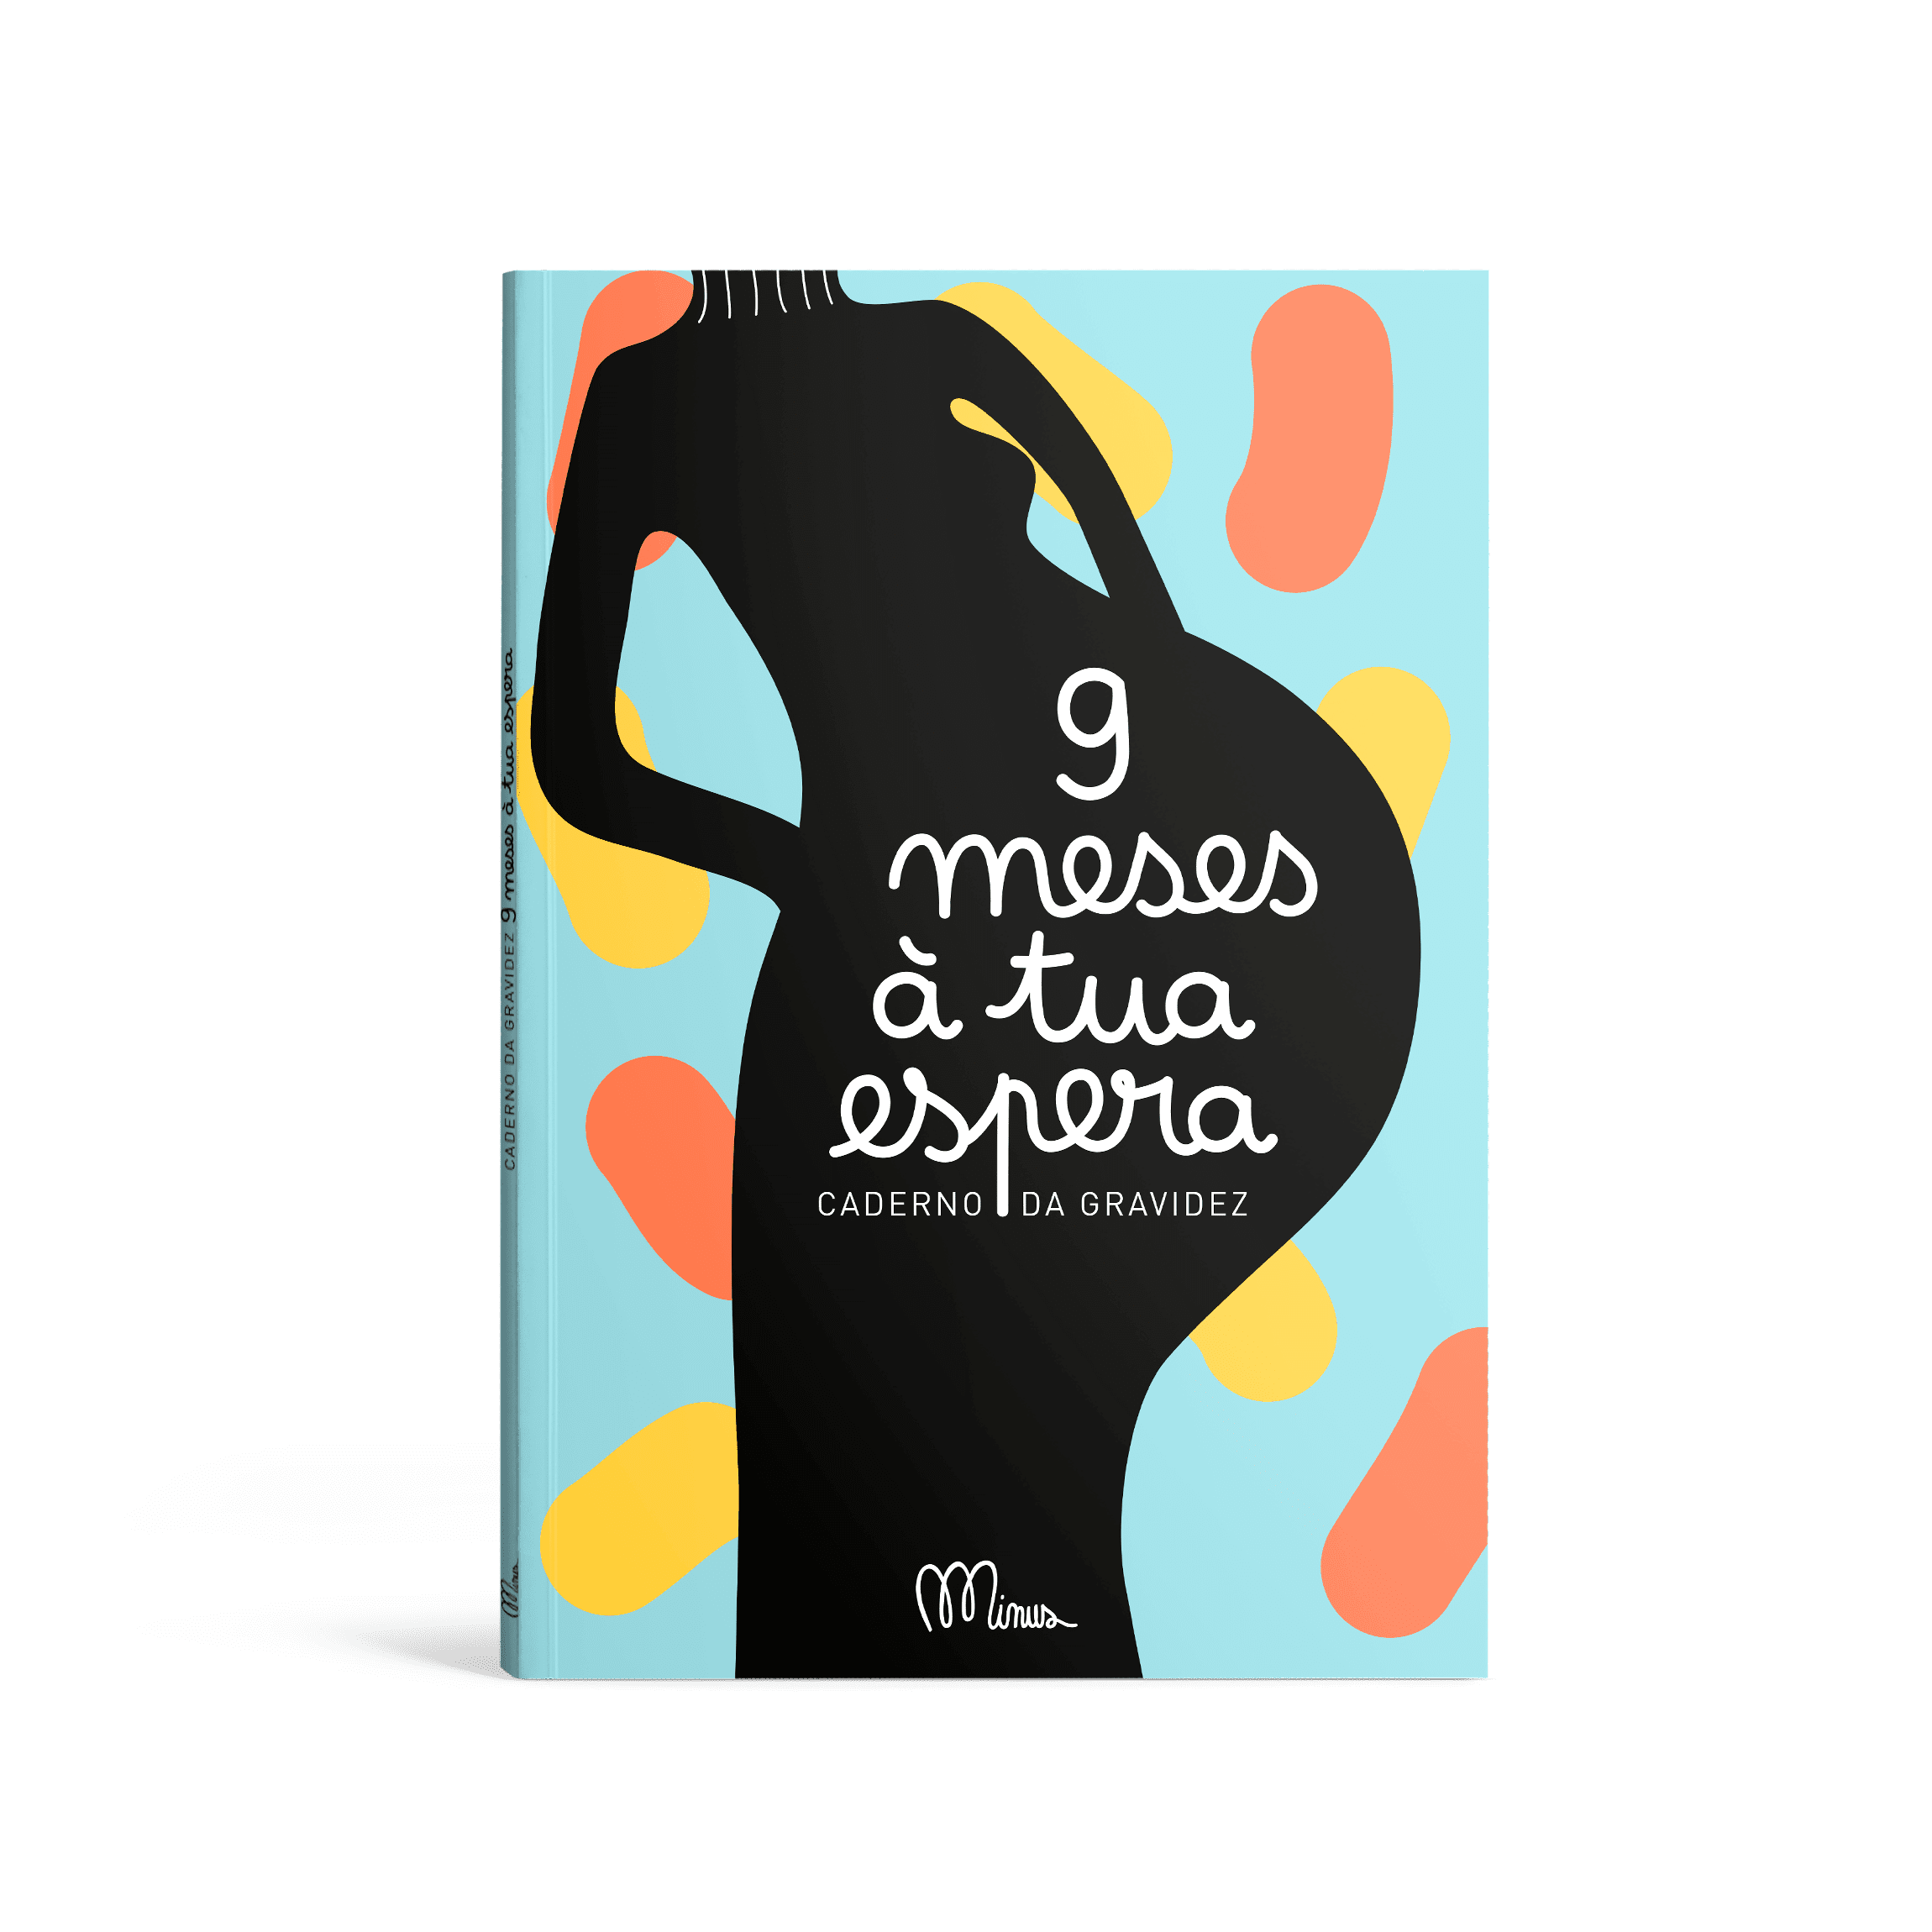 Livro ”9 meses à tua espera" Mini-Me - Baby & Kids Store